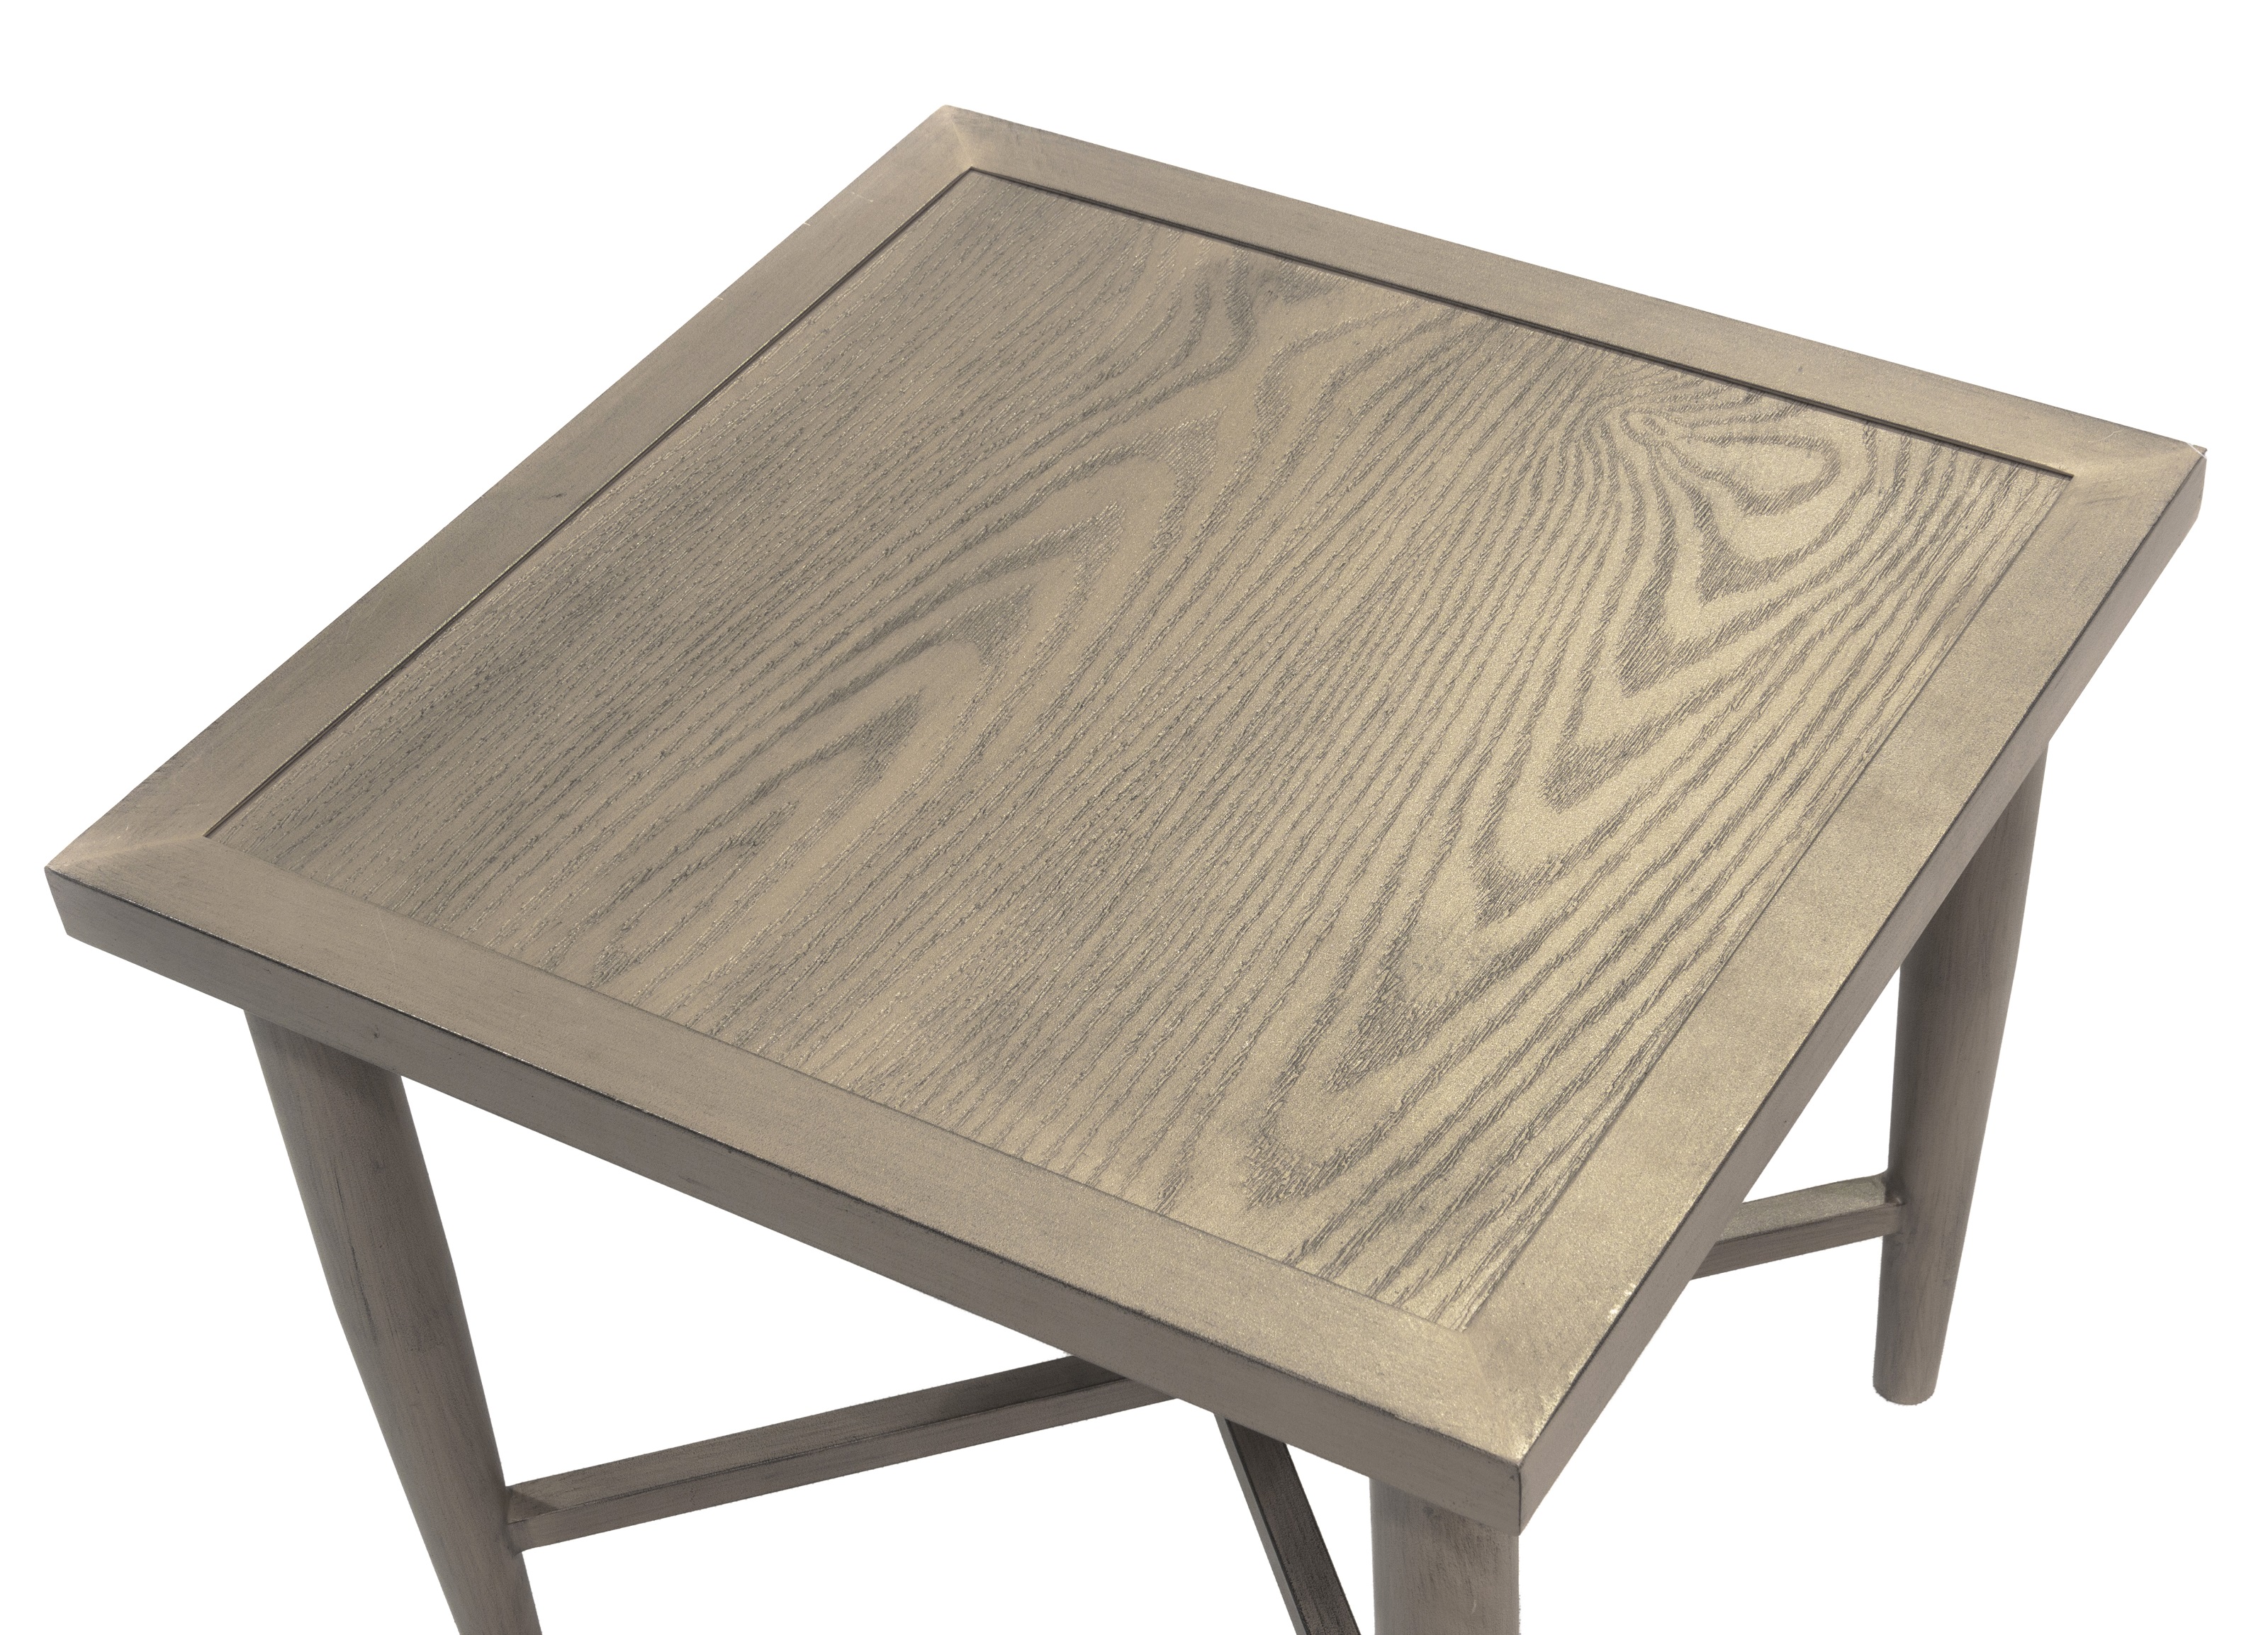 Donglin Outdoor Patio Furniture Sutton Creek 7-Piece Steel Sectional Sofa PE Wicker Rattan Set,Gray - image 8 of 16